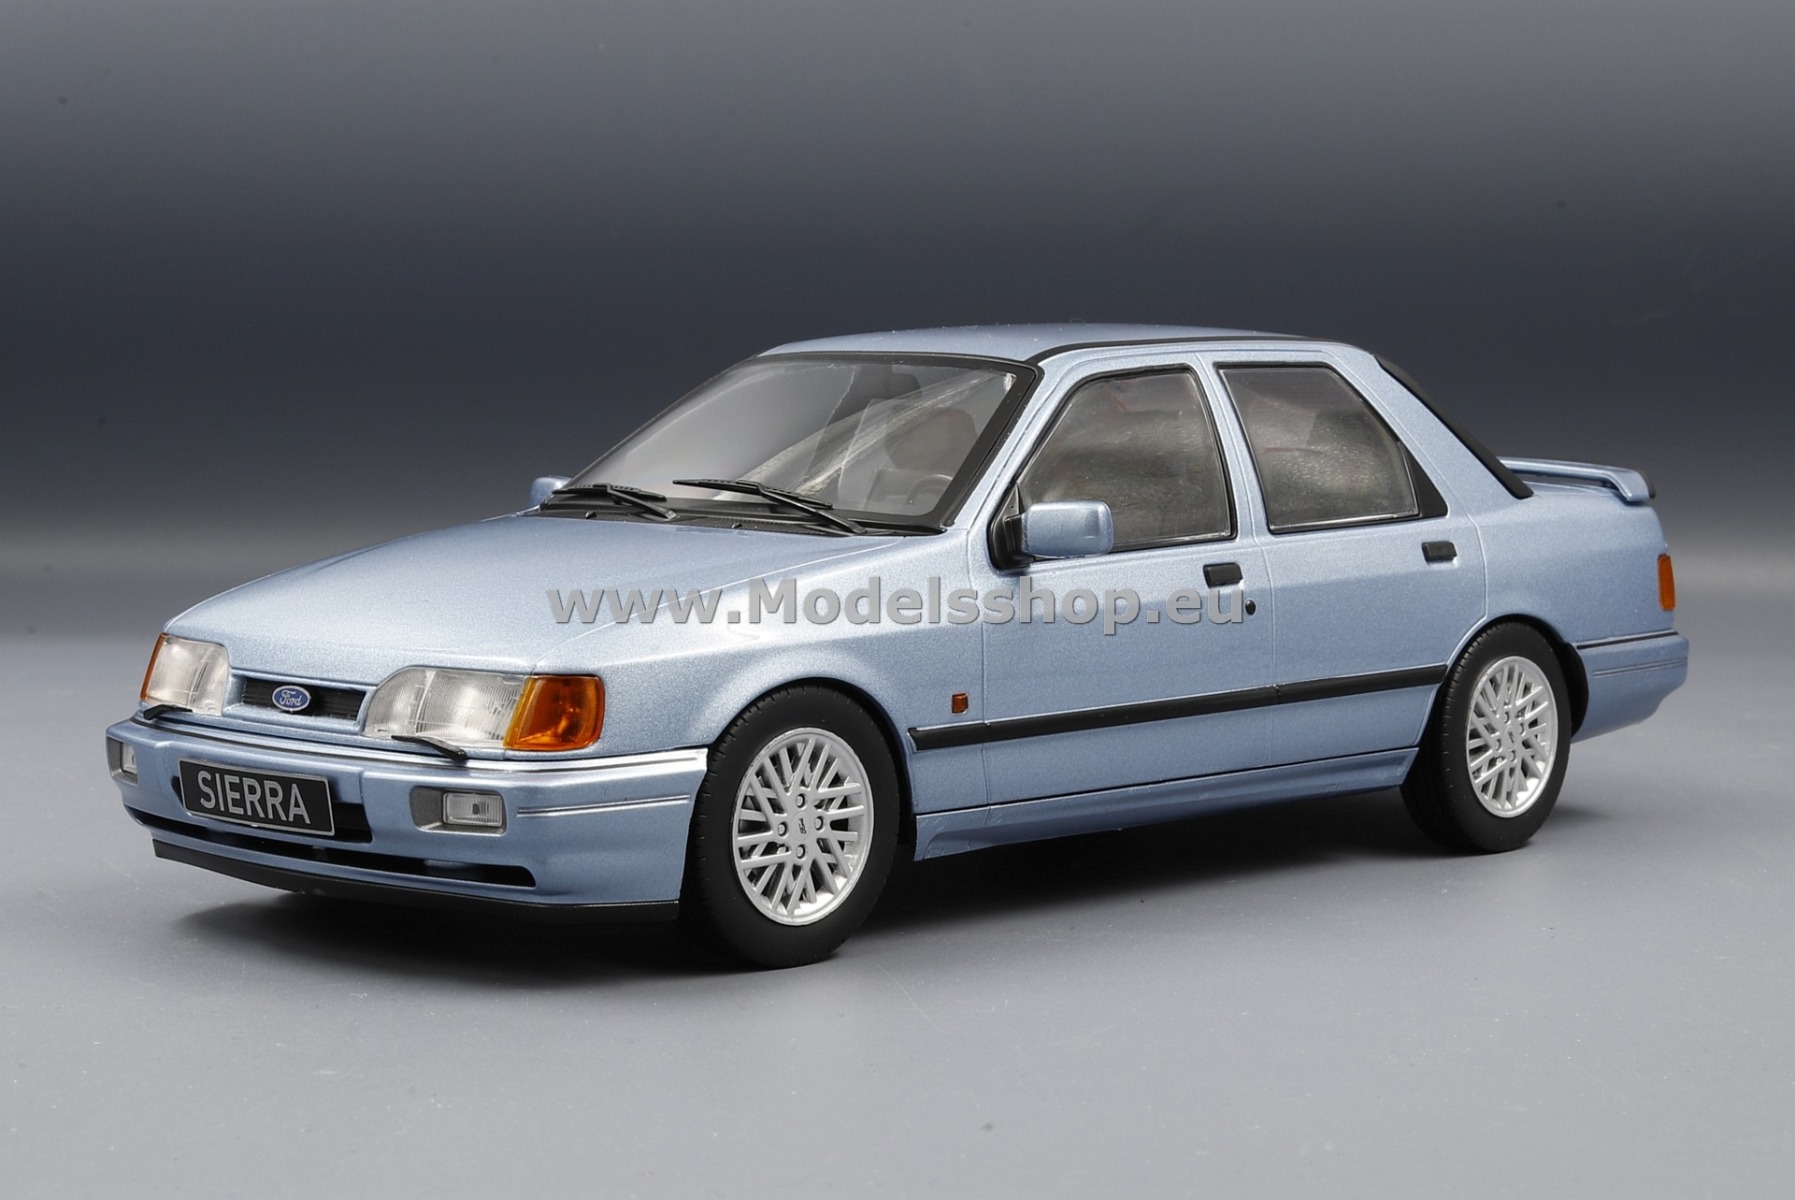 Ford Sierra Cosworth, 1988 /light blue - metallic/